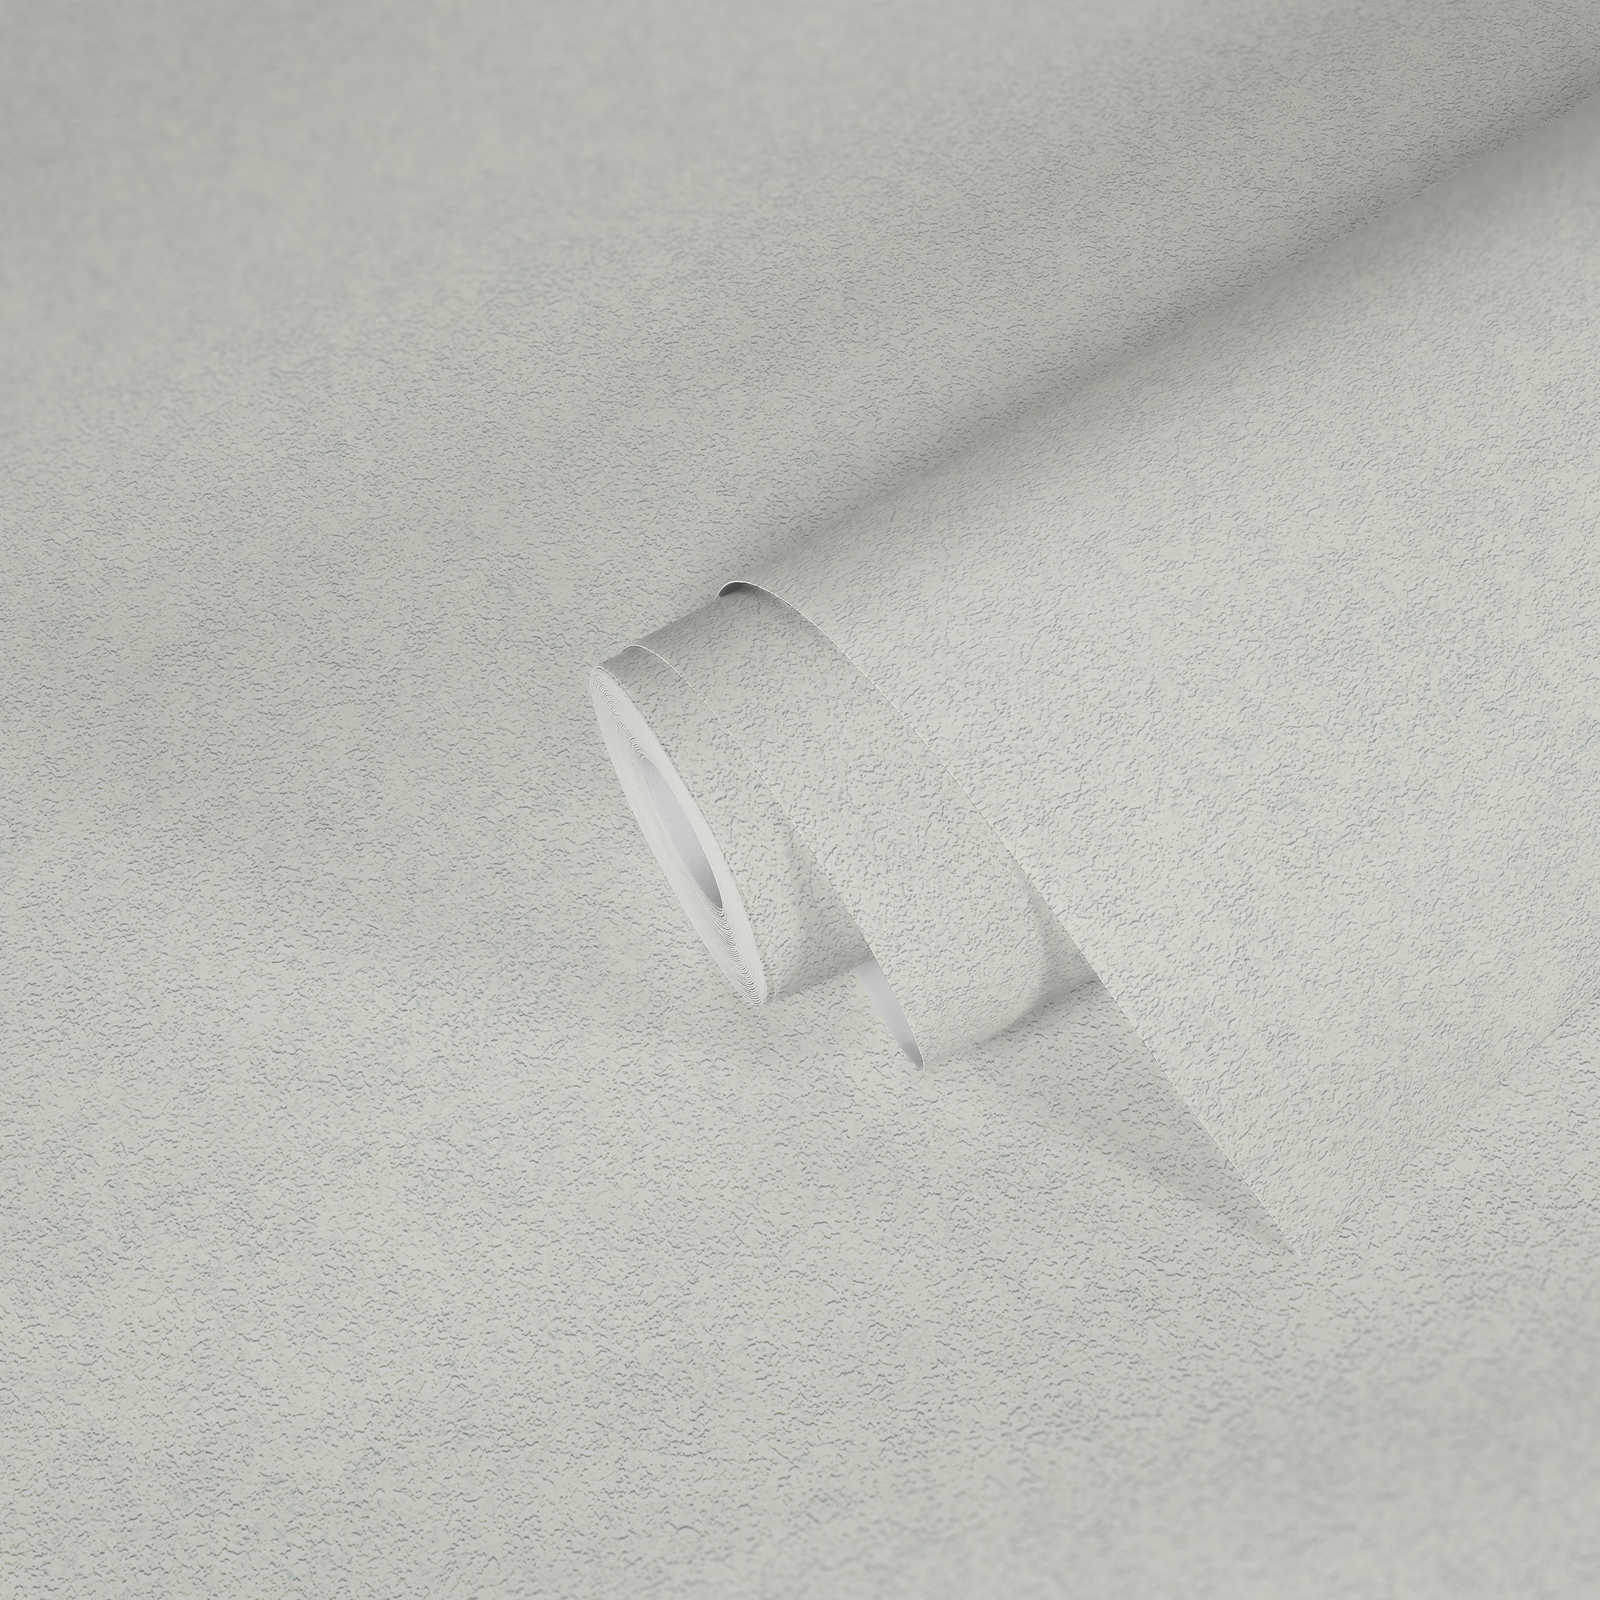             Carta da parati ottica in gesso bianco con motivo a struttura 3D
        